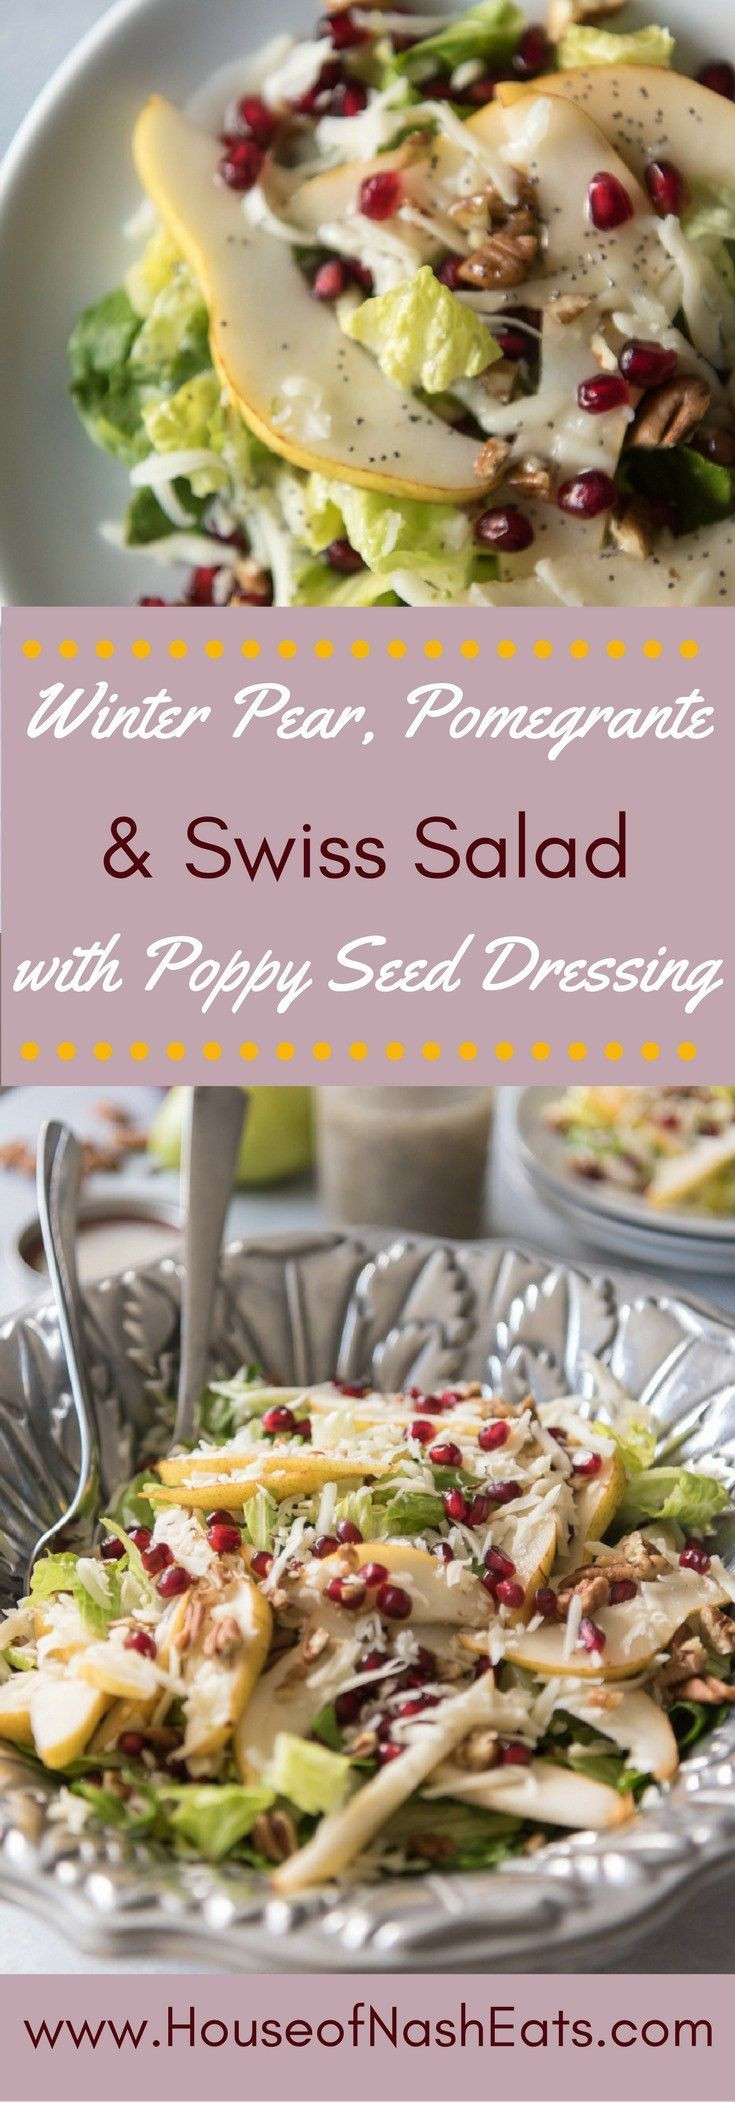 Salad For Christmas Dinner
 100 Christmas Salad Recipes on Pinterest